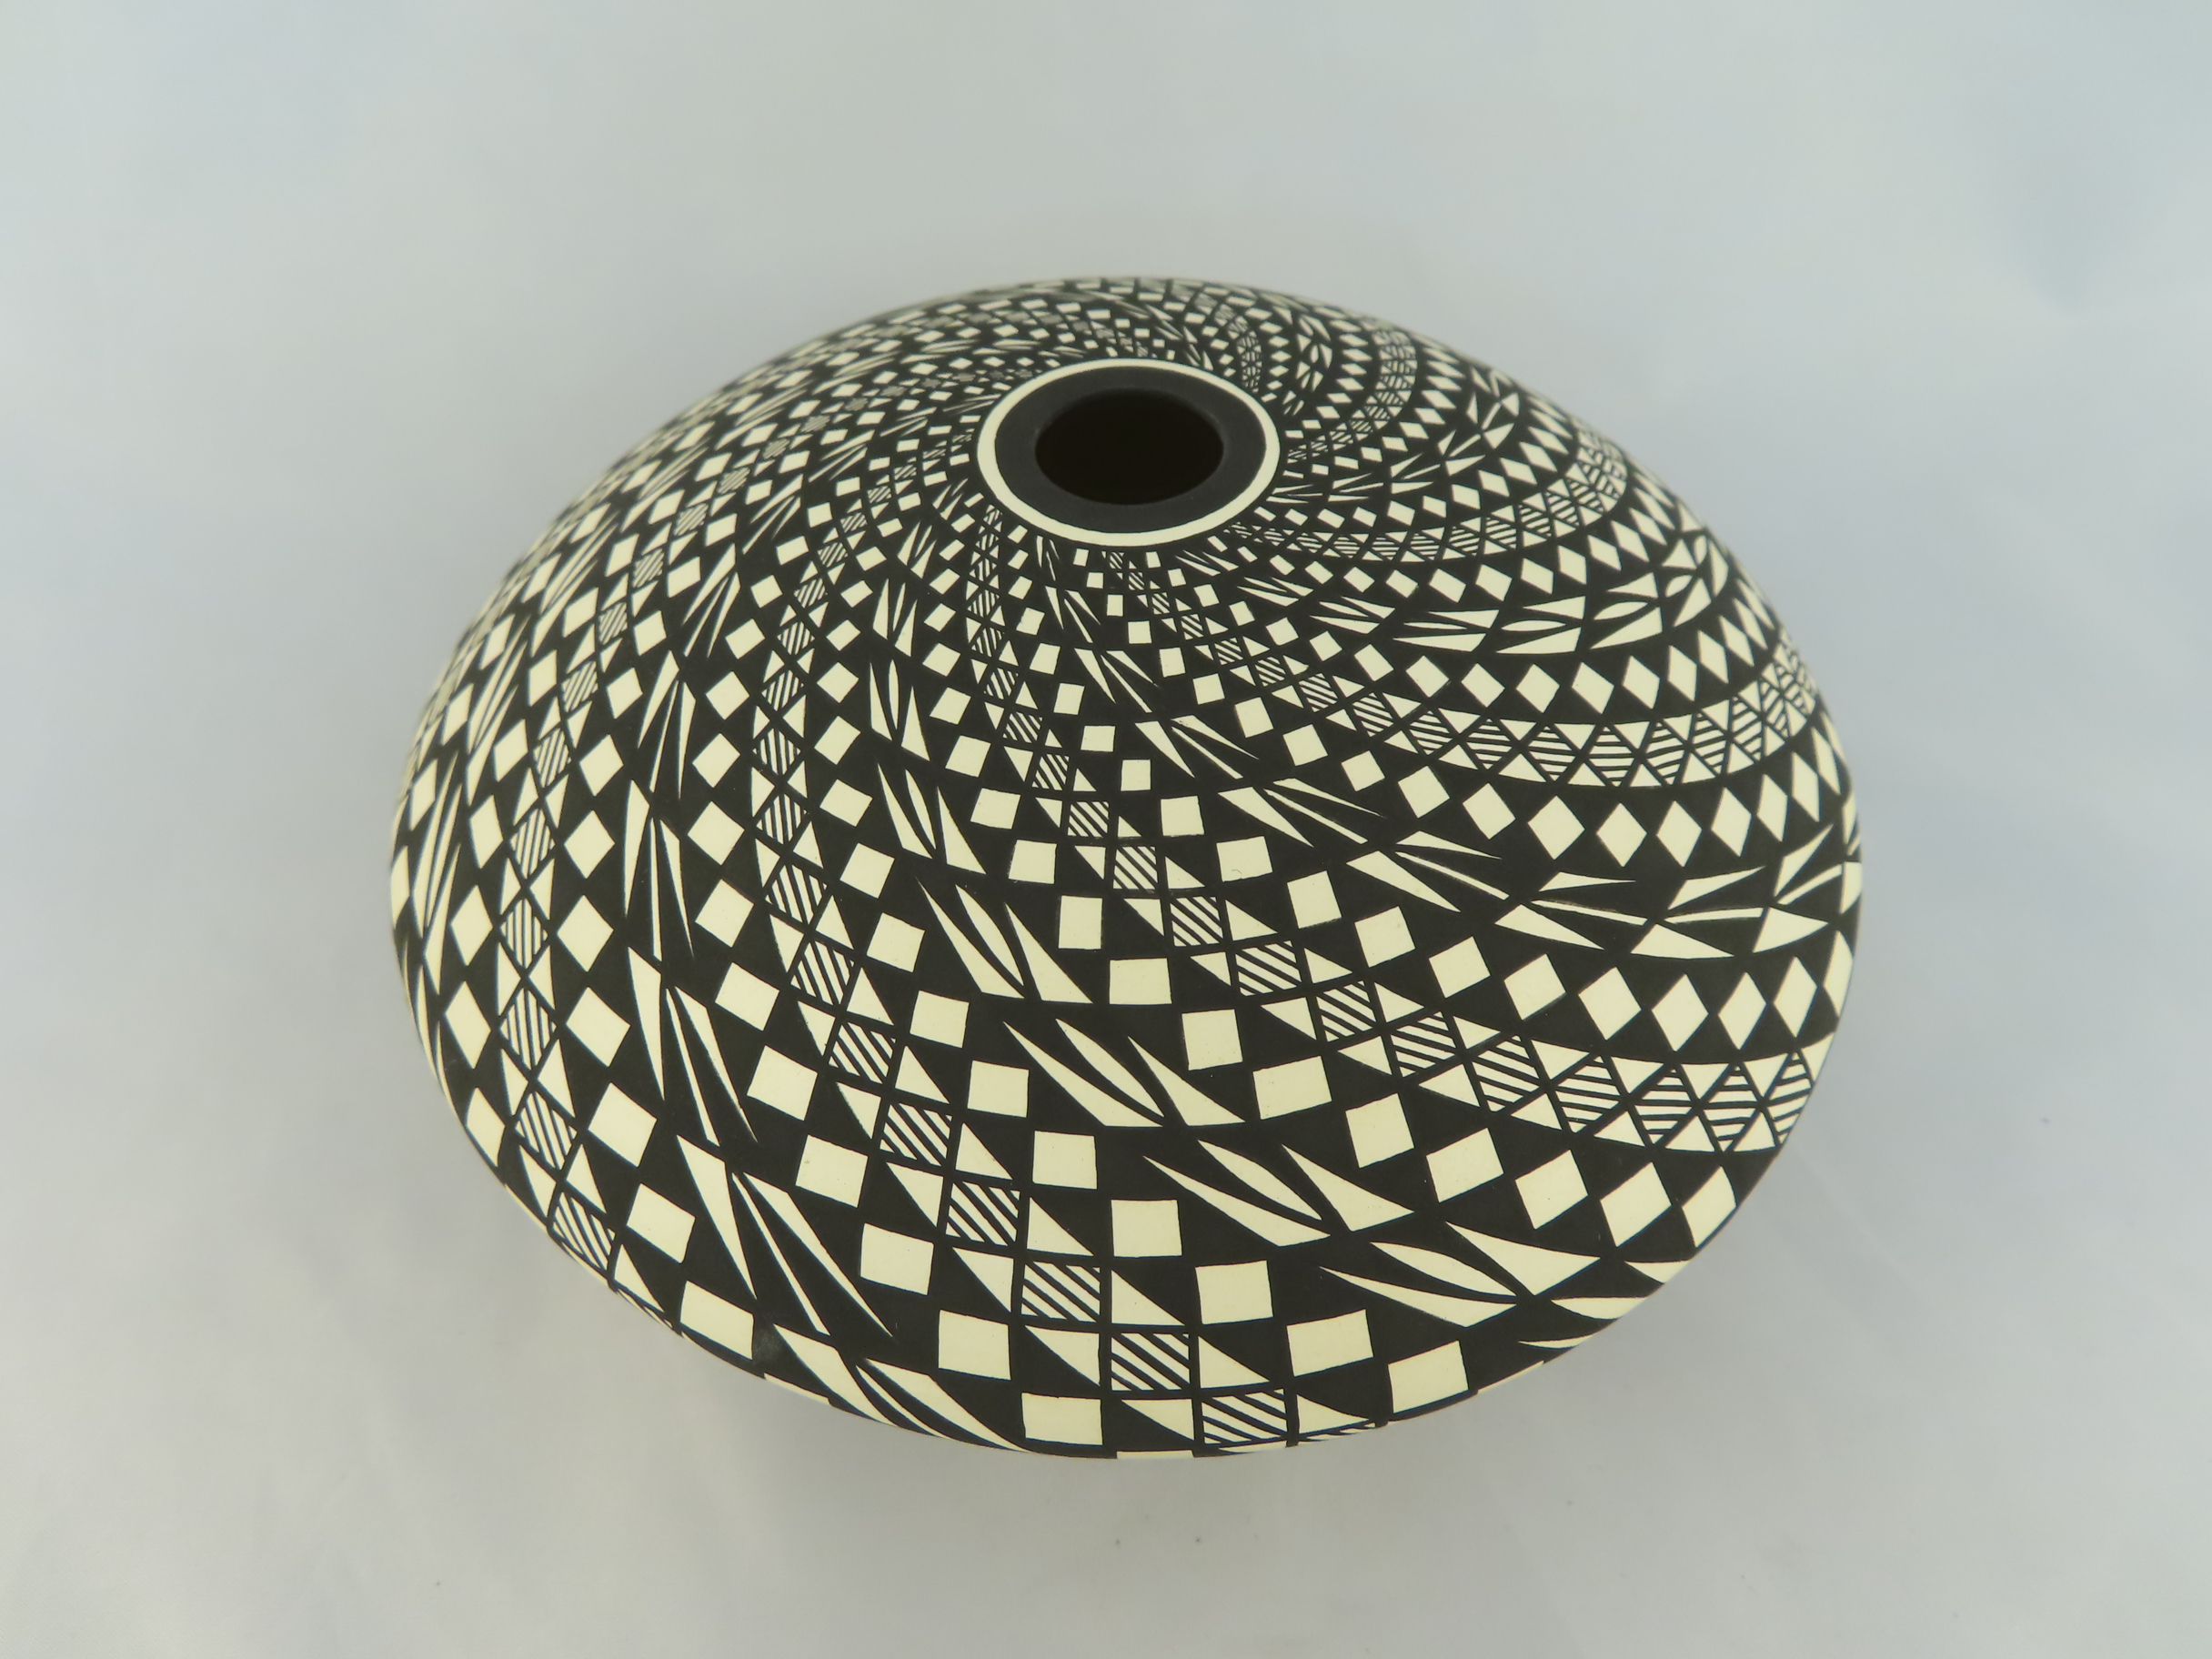 Native American Pottery - Black & White Painted 'Swirl' Pot by Laguna Pueblo Potter, Robert Kasero, Sr. FOR SALE $695-